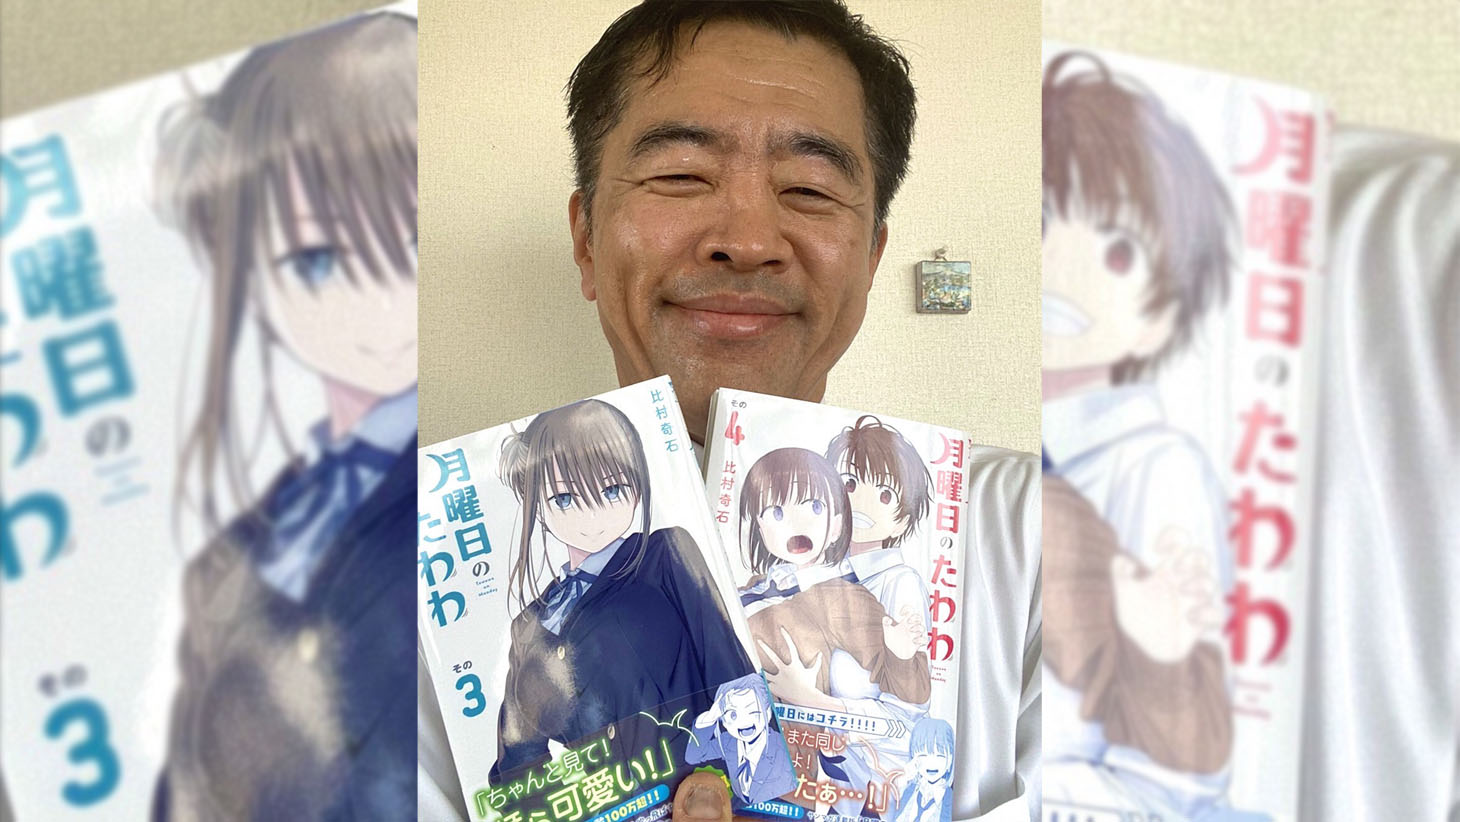 Politician Kenzo Fujisue receives backlash over Tawawa on Monday purchase -  Niche Gamer